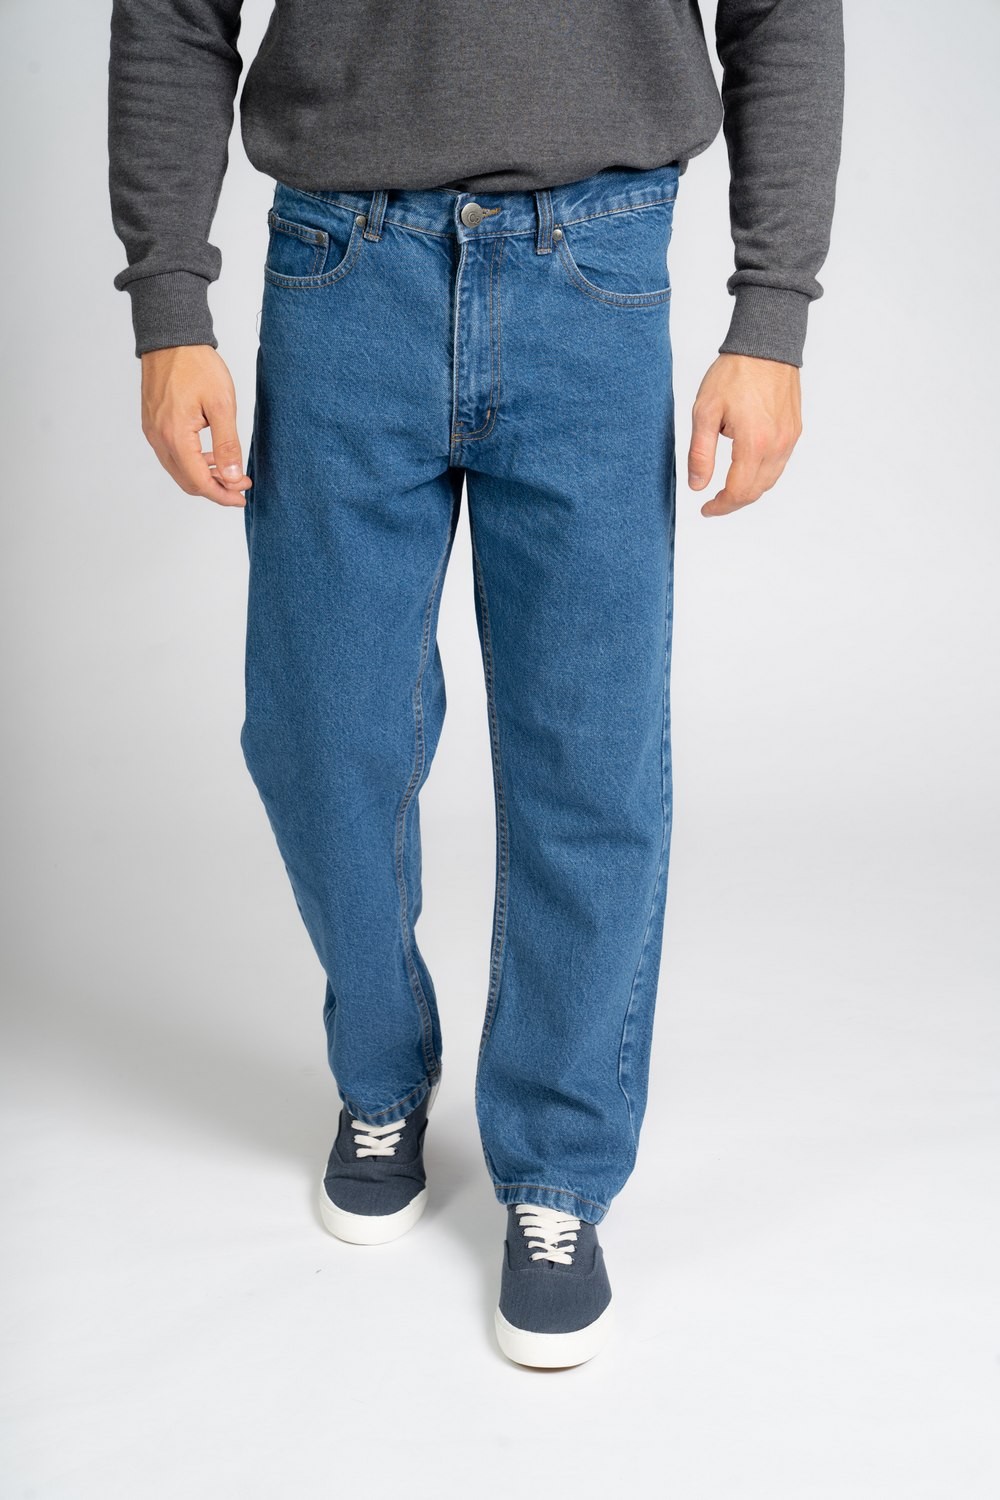 Carabou Jeans ACJ waist size 36R